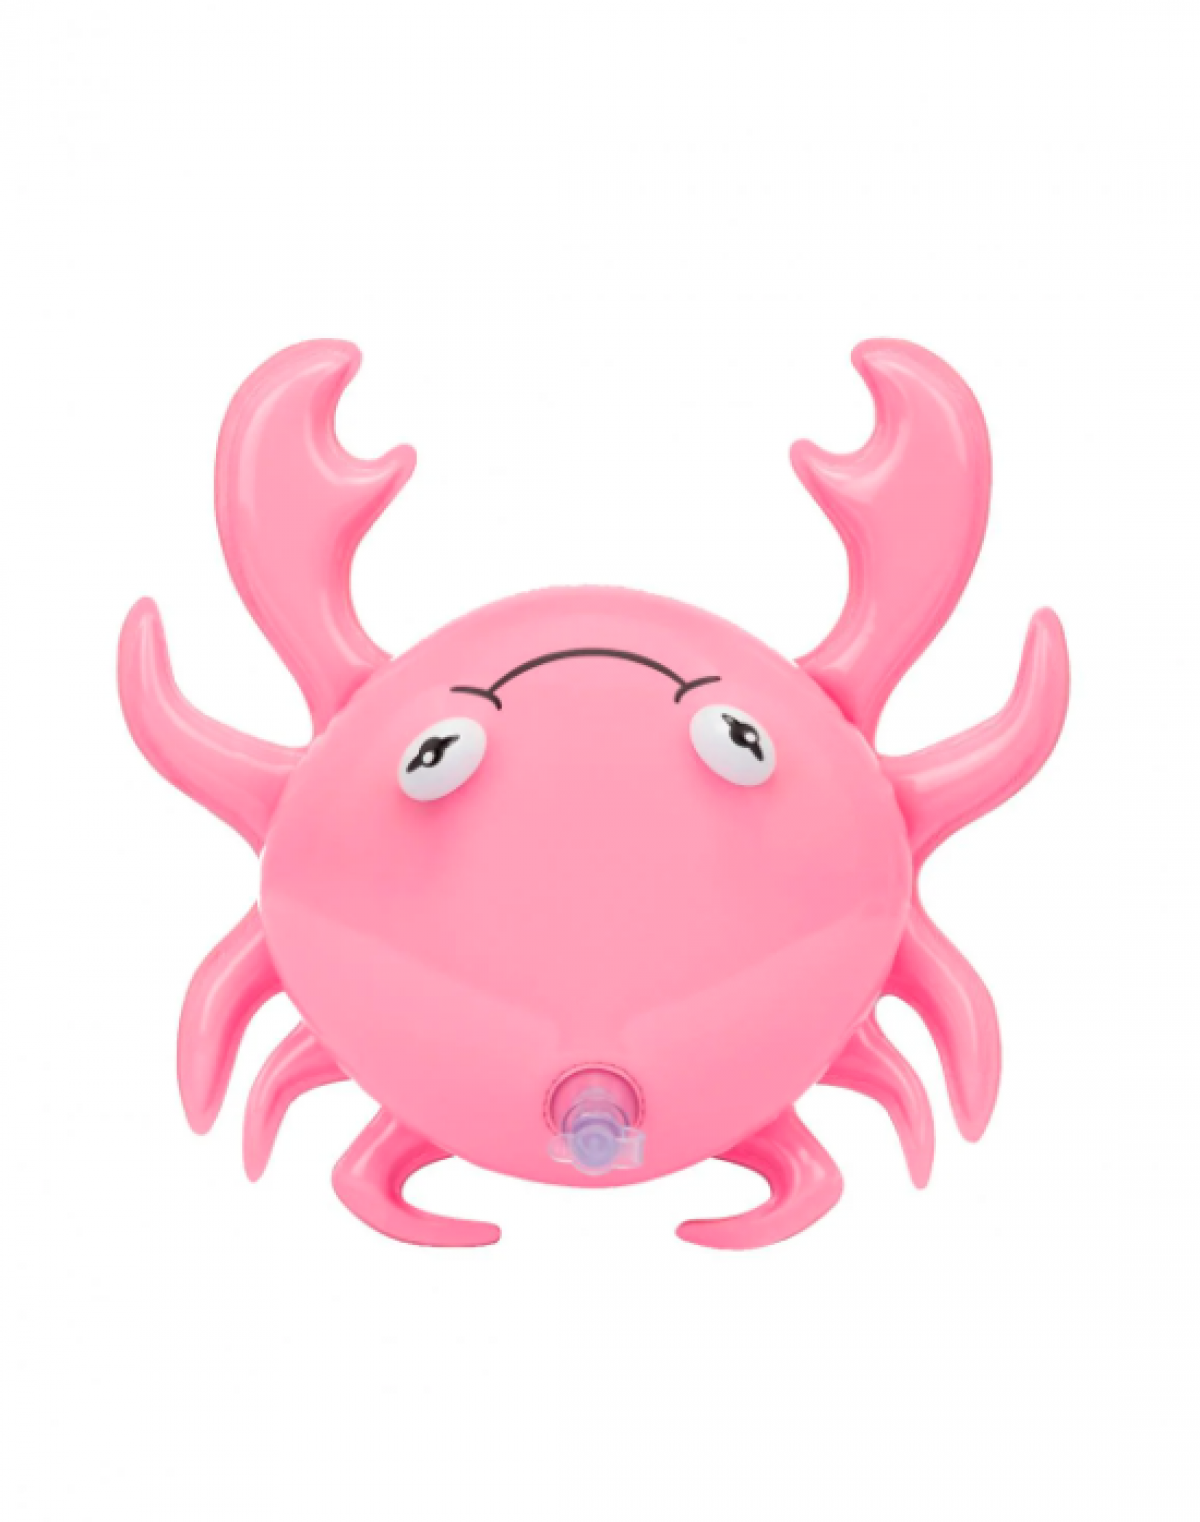 Le crabe rose